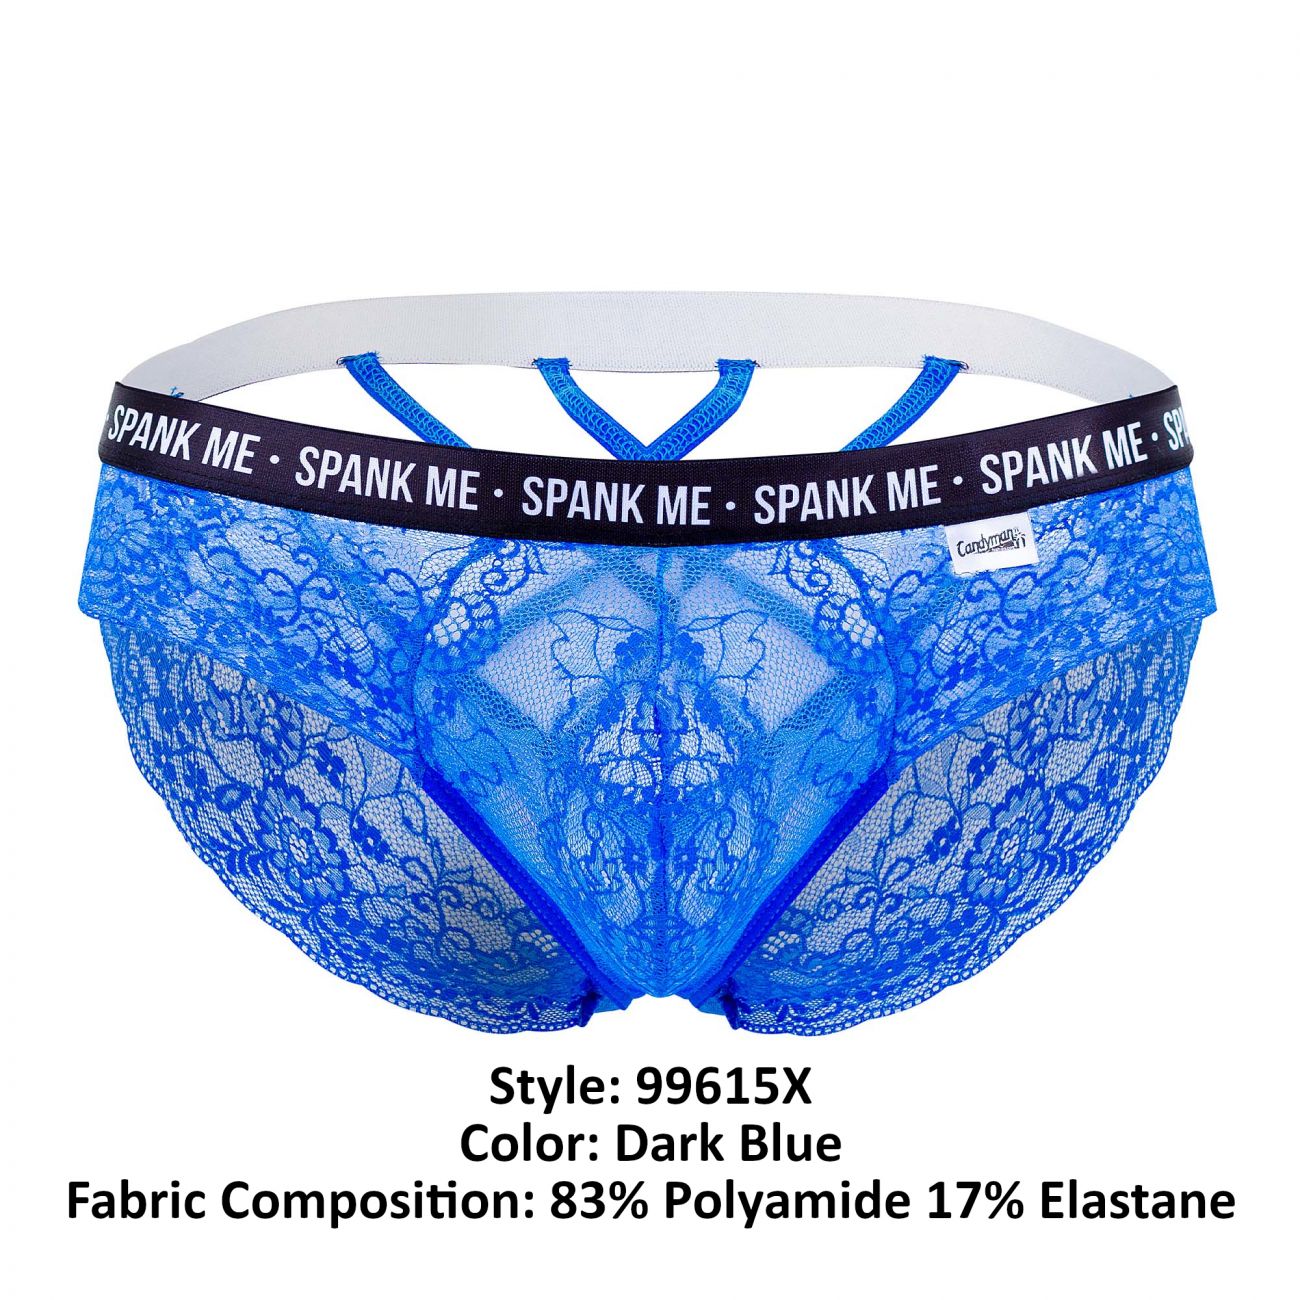 CandyMan 99615X Spank Me Lace Briefs Dark Blue Plus Sizes